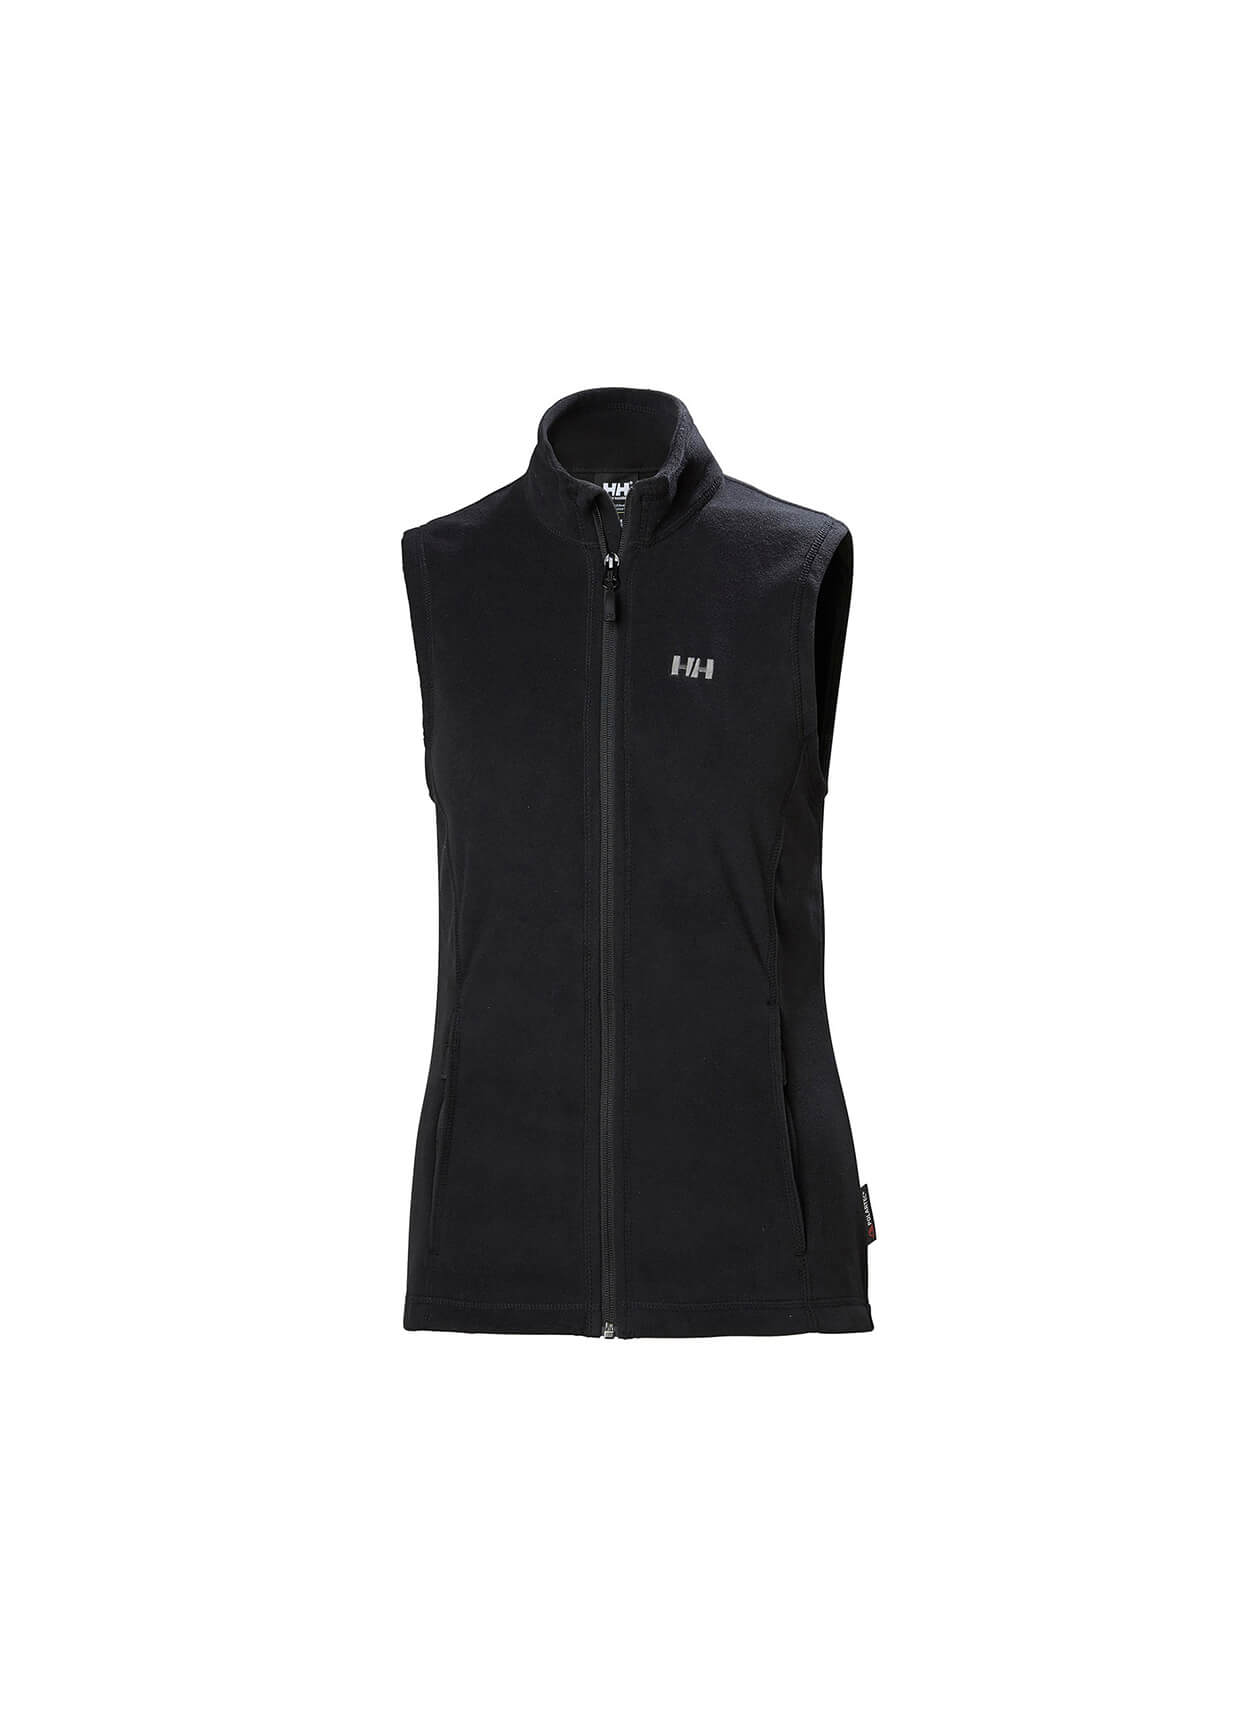 Helly Hansen 51830 - Women's Daybreaker Fleece Vest